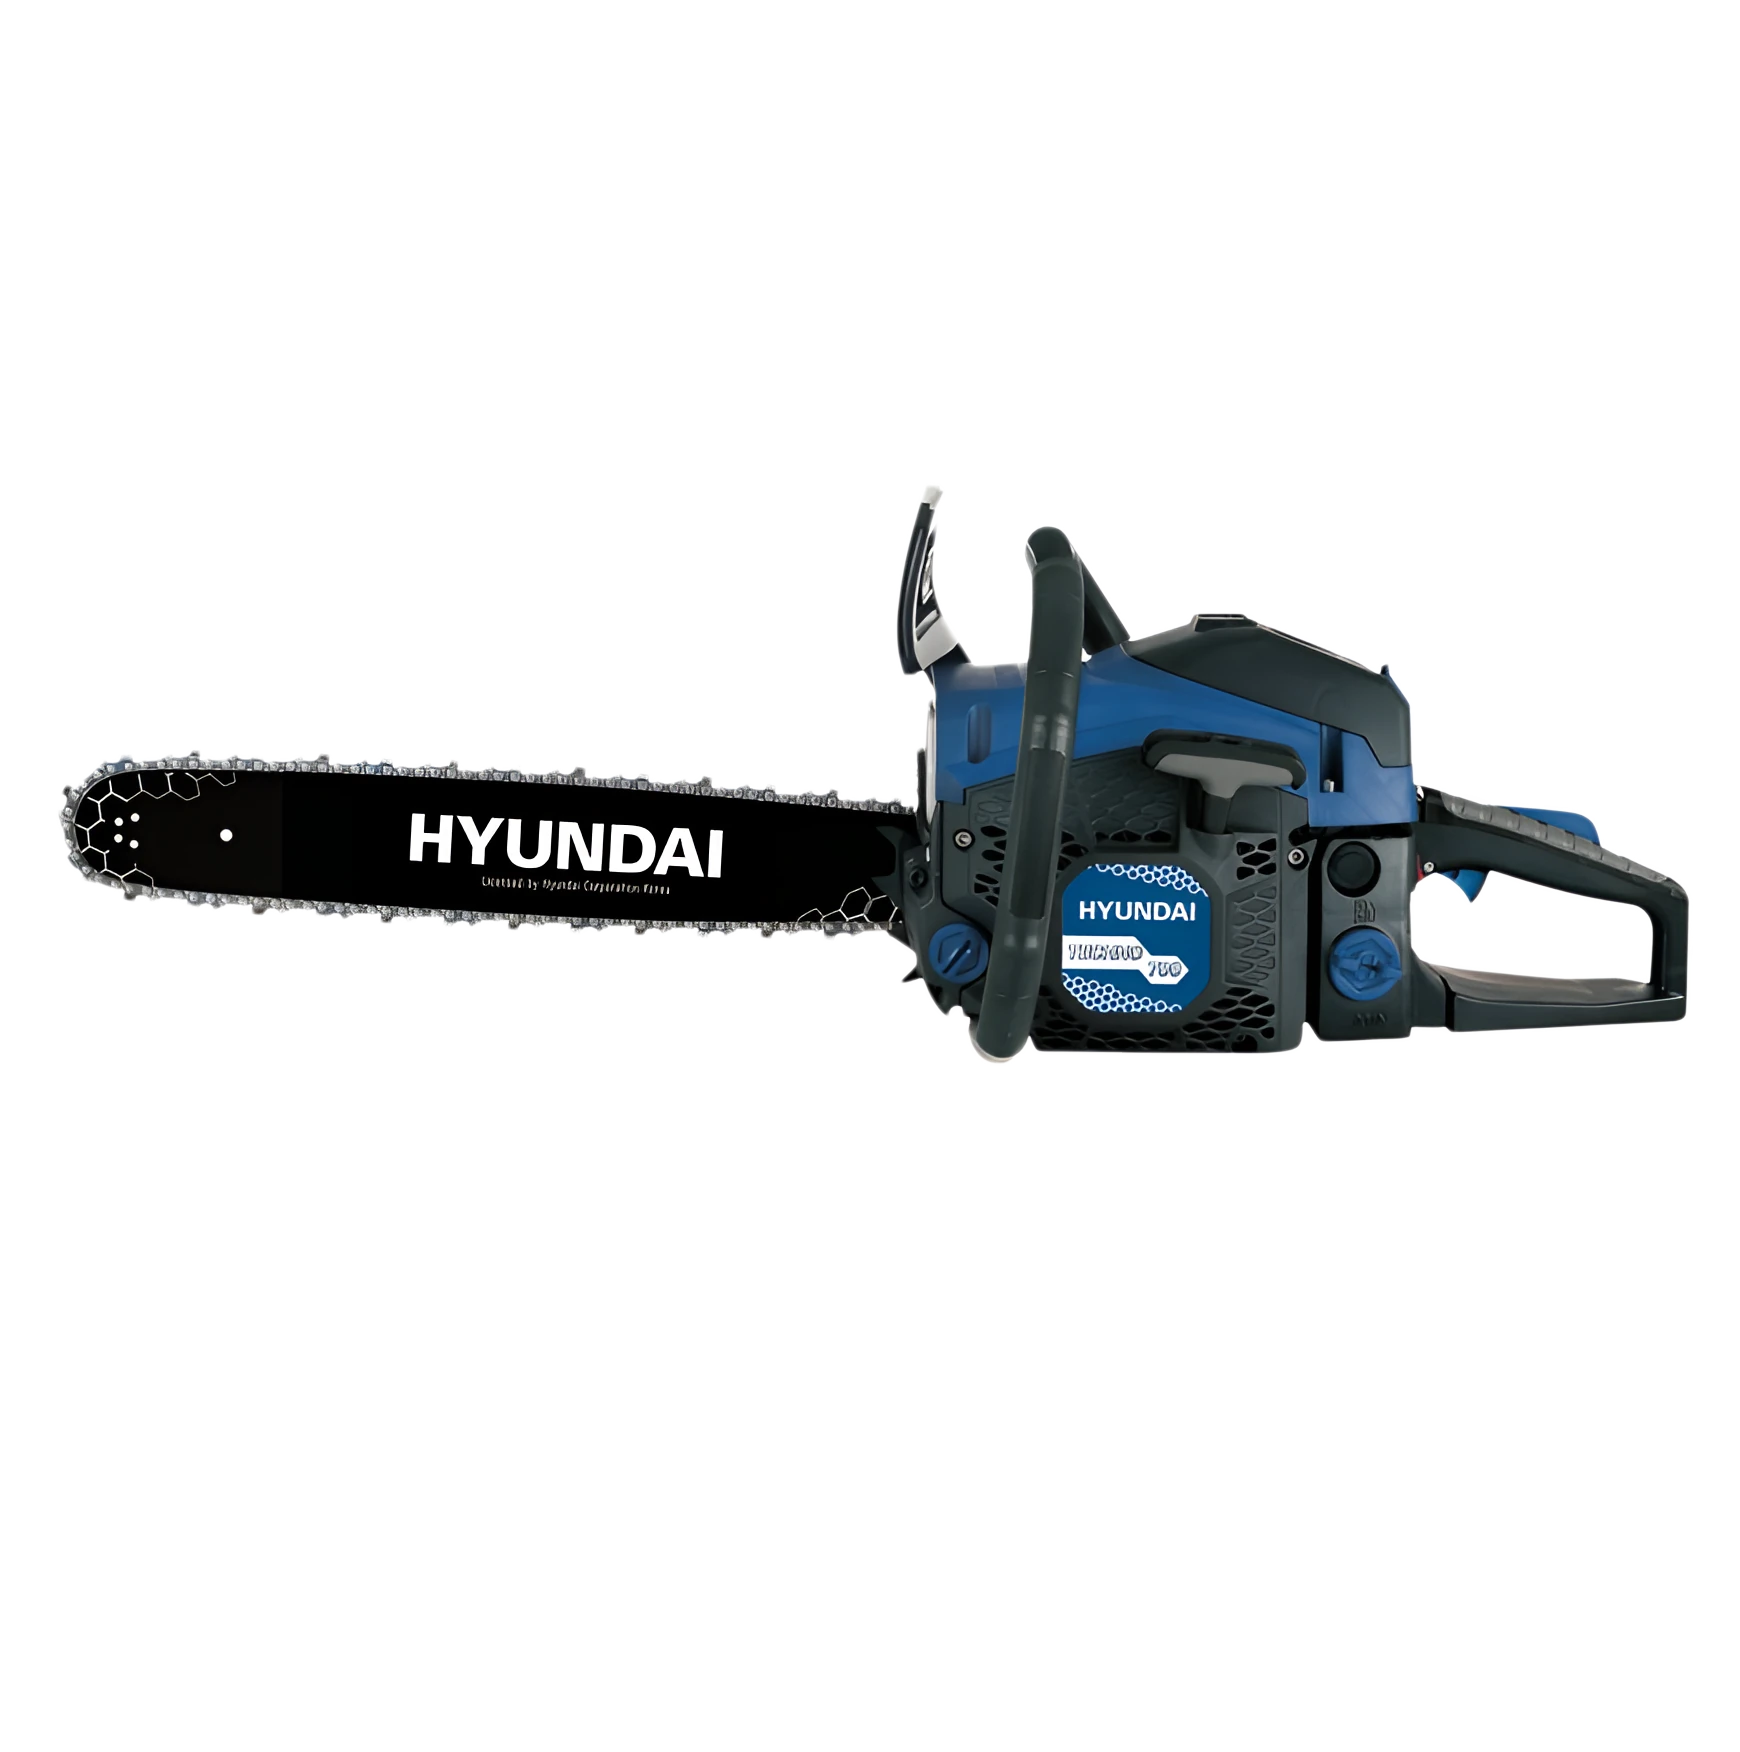 Hyundai Petrol Chain Saw Techno700